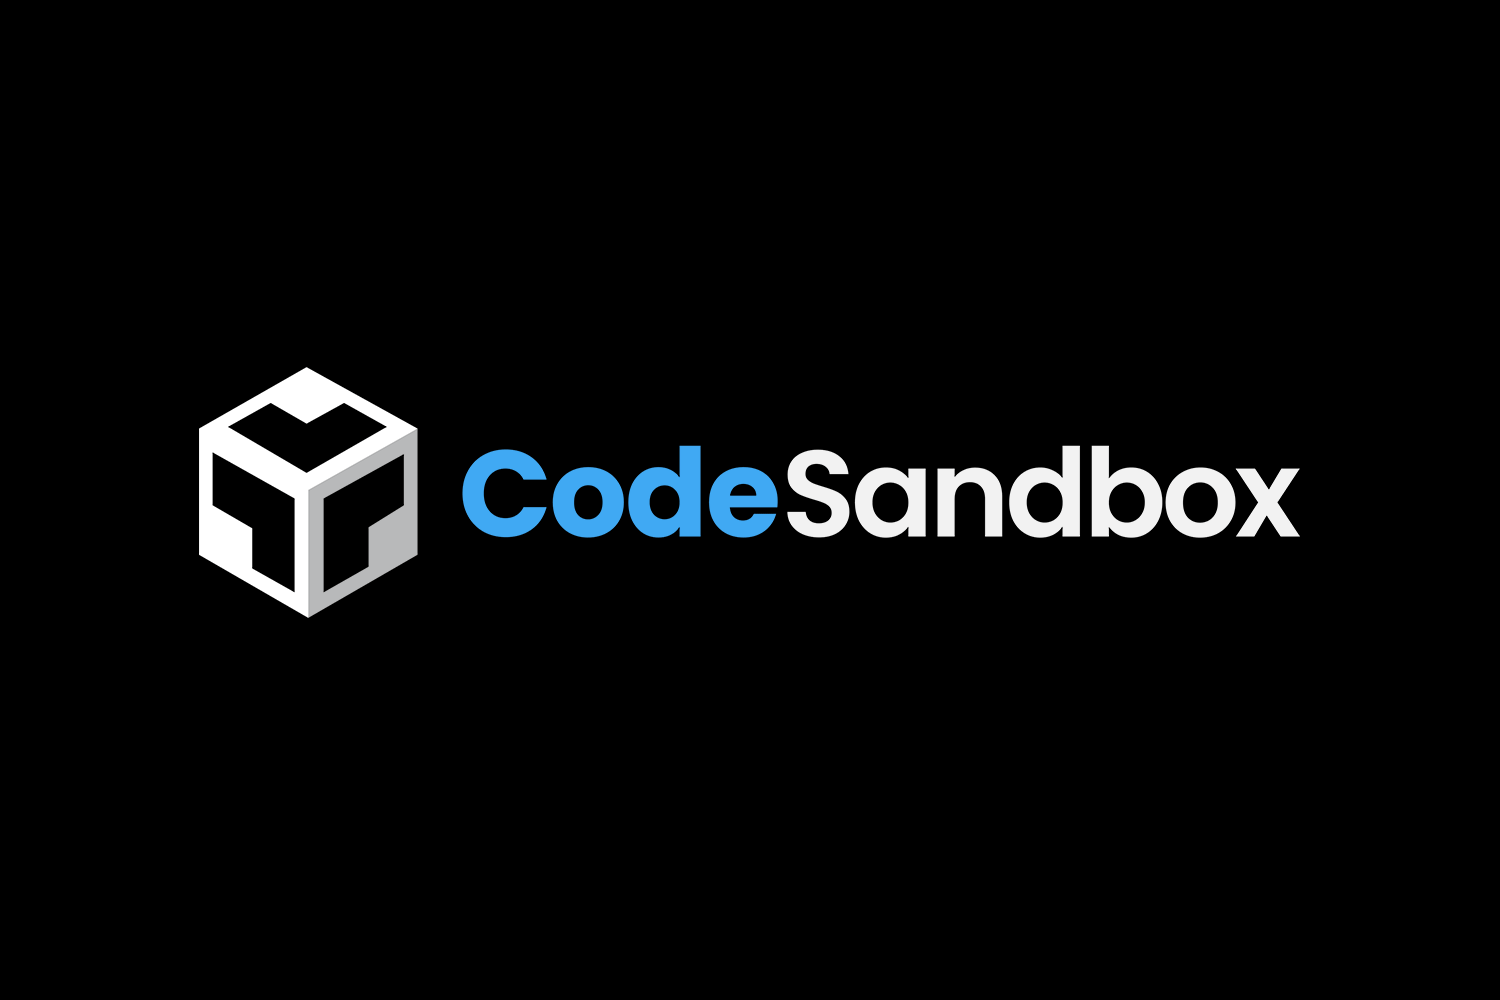 CodeSandbox Raises $2.4M Seed Round led by Kleiner Perkins